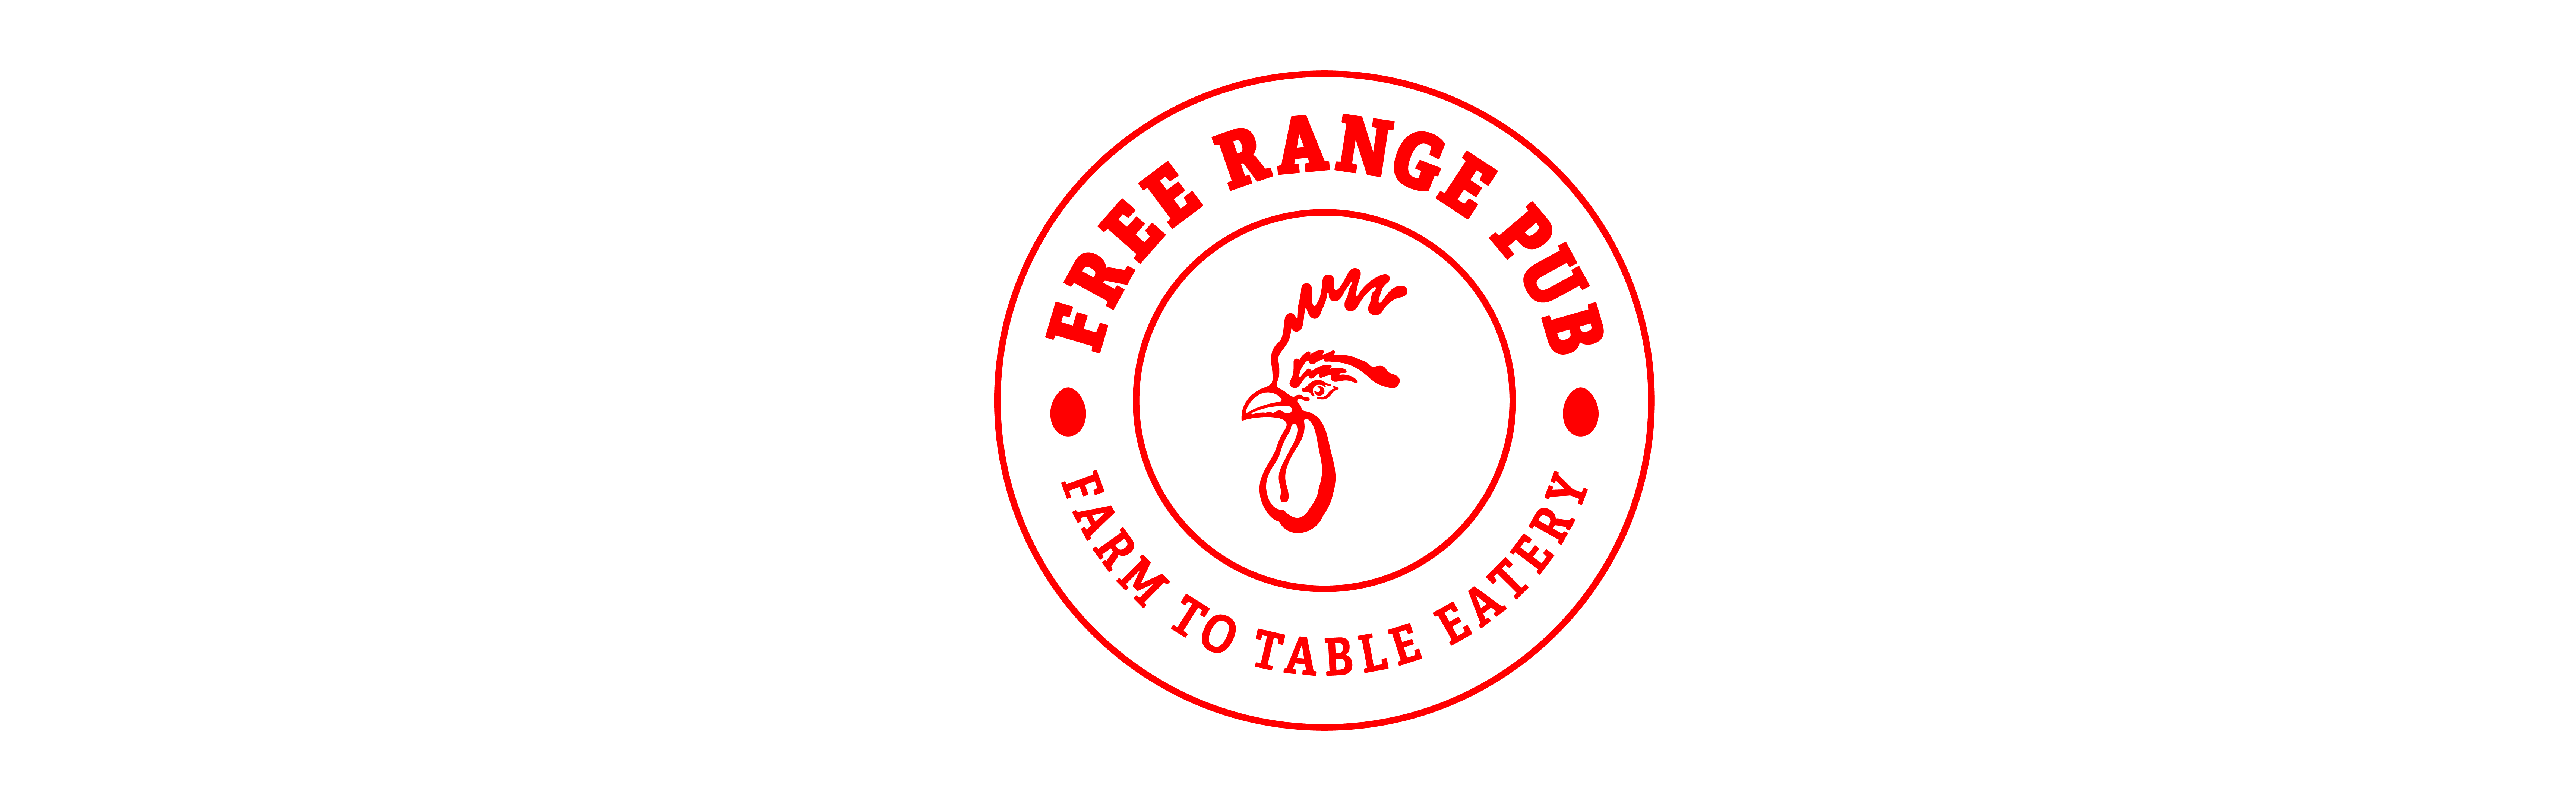 Free Range Pub logo